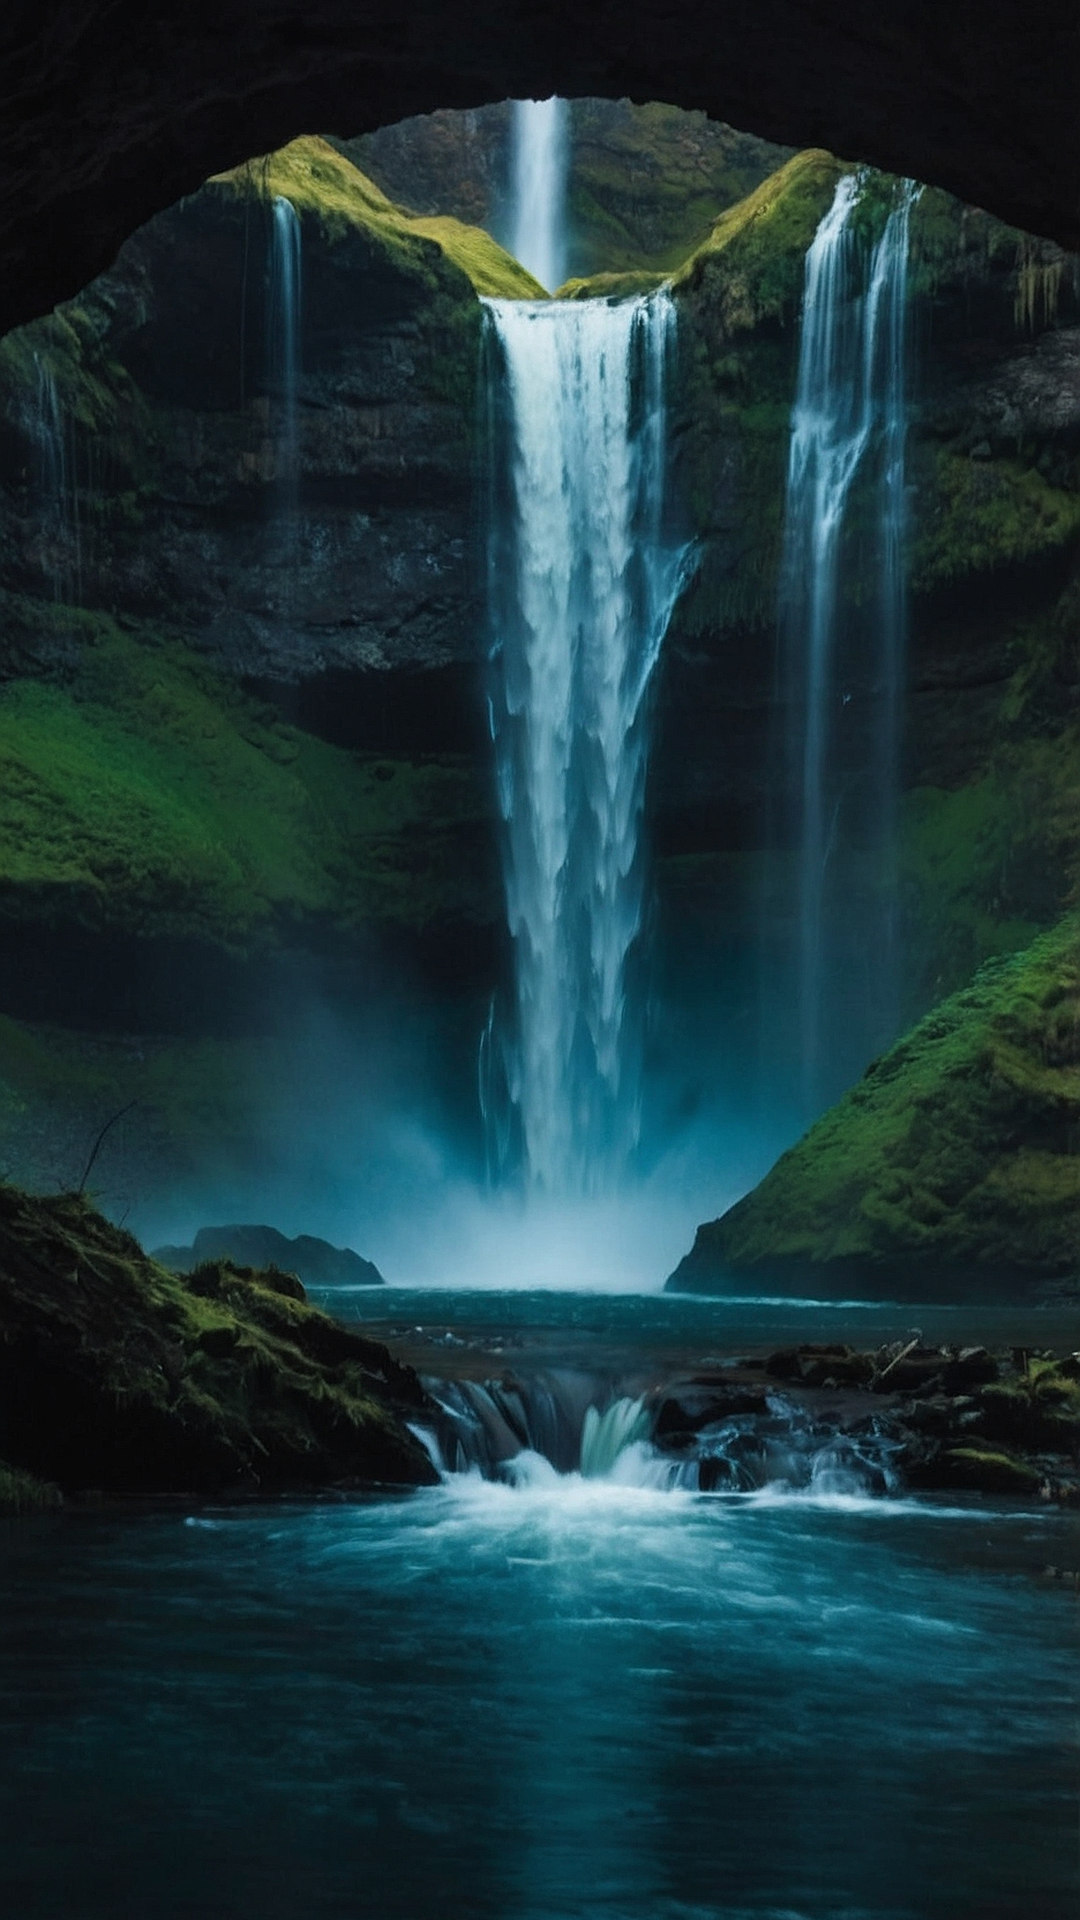 Liquid Harmony: Harmonious Waterfall Wallpaper Samples